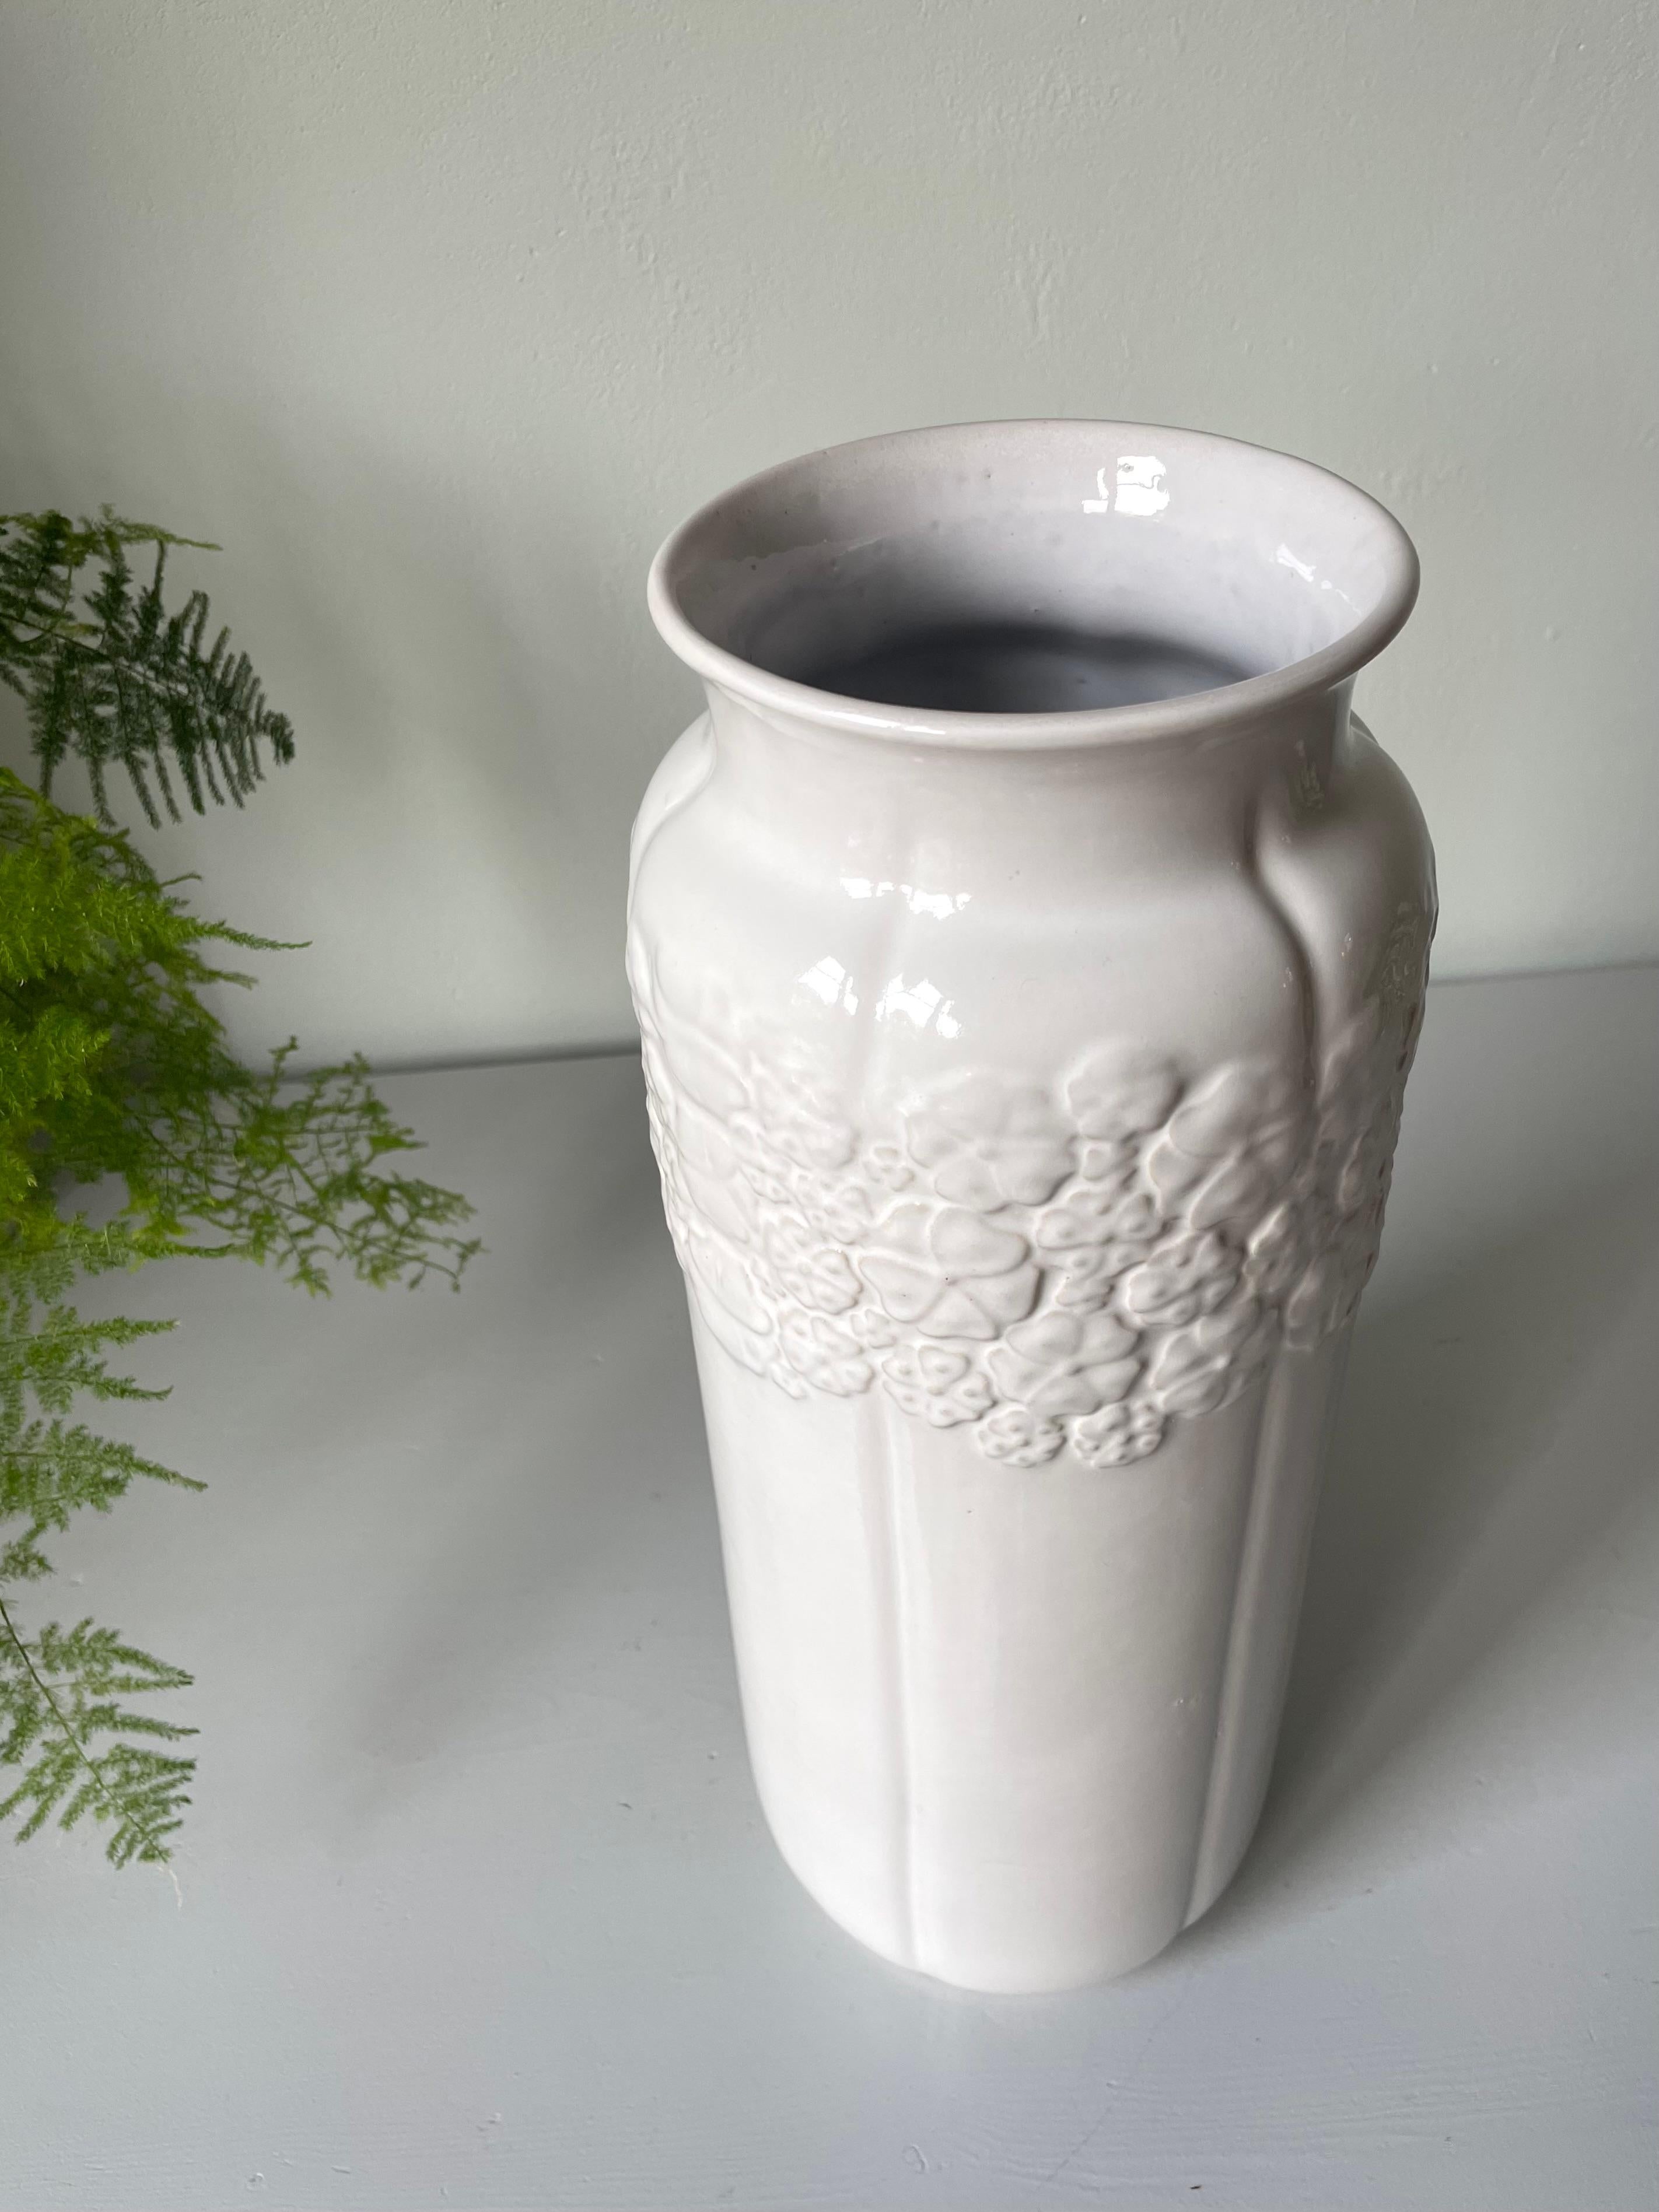 Bay Keramik Tall White Modernist Floor Vase With Organic Decor, 1970s For Sale 2